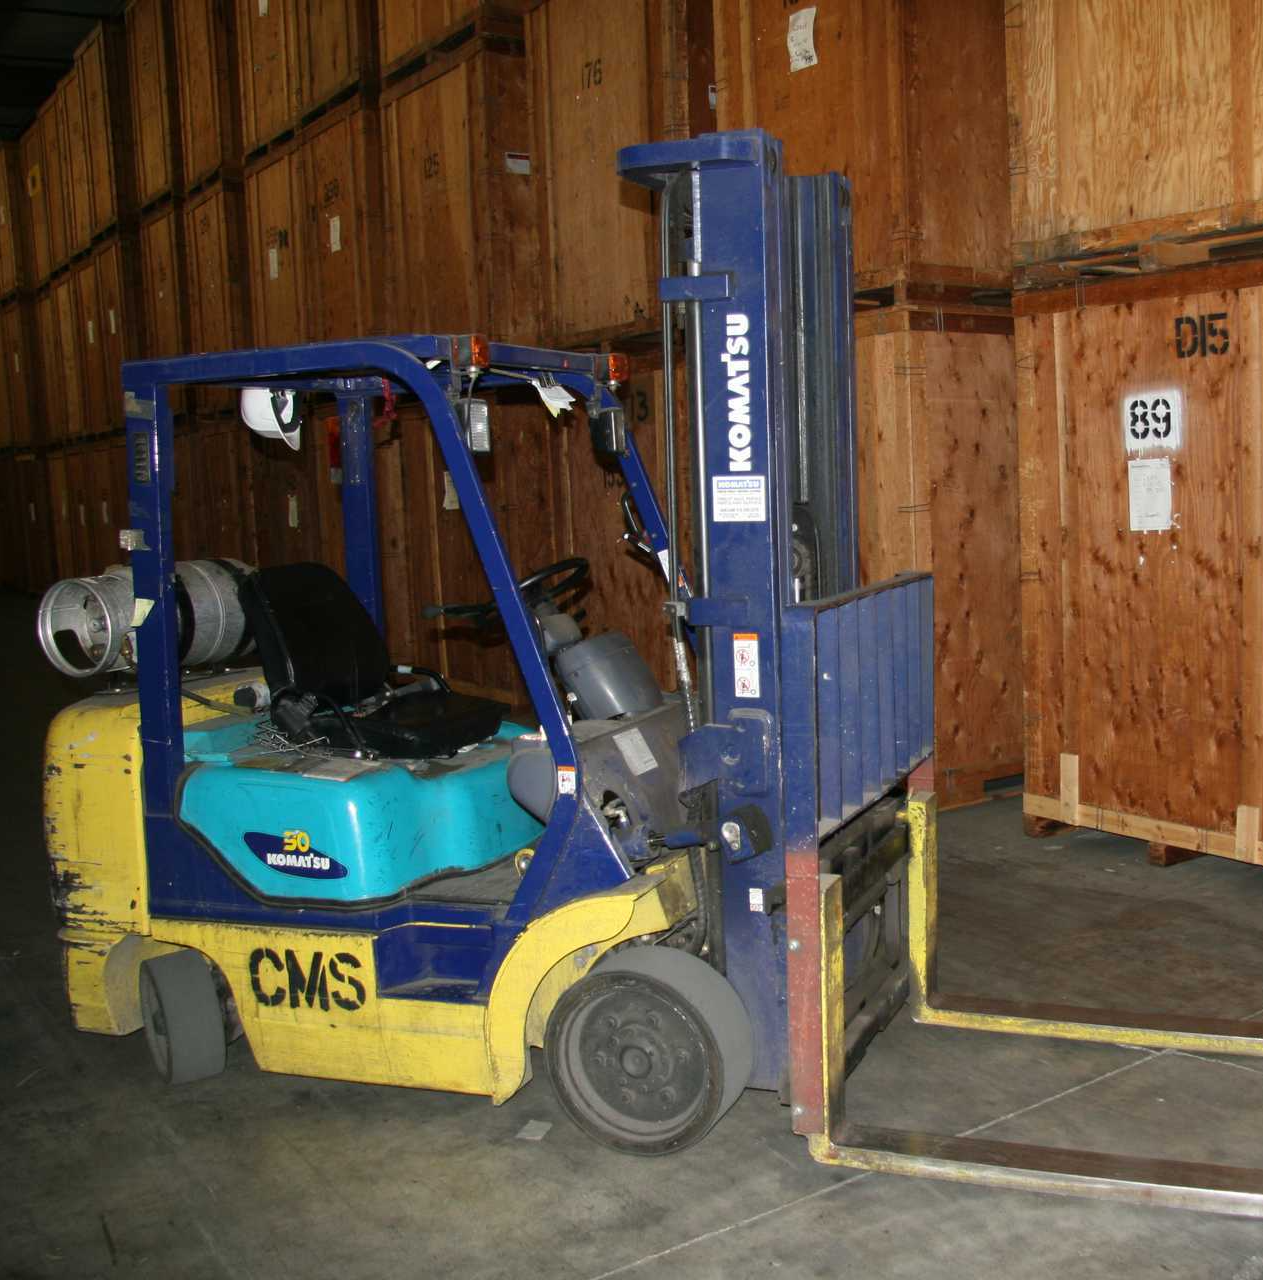 Forklift Inside International Storage Facility